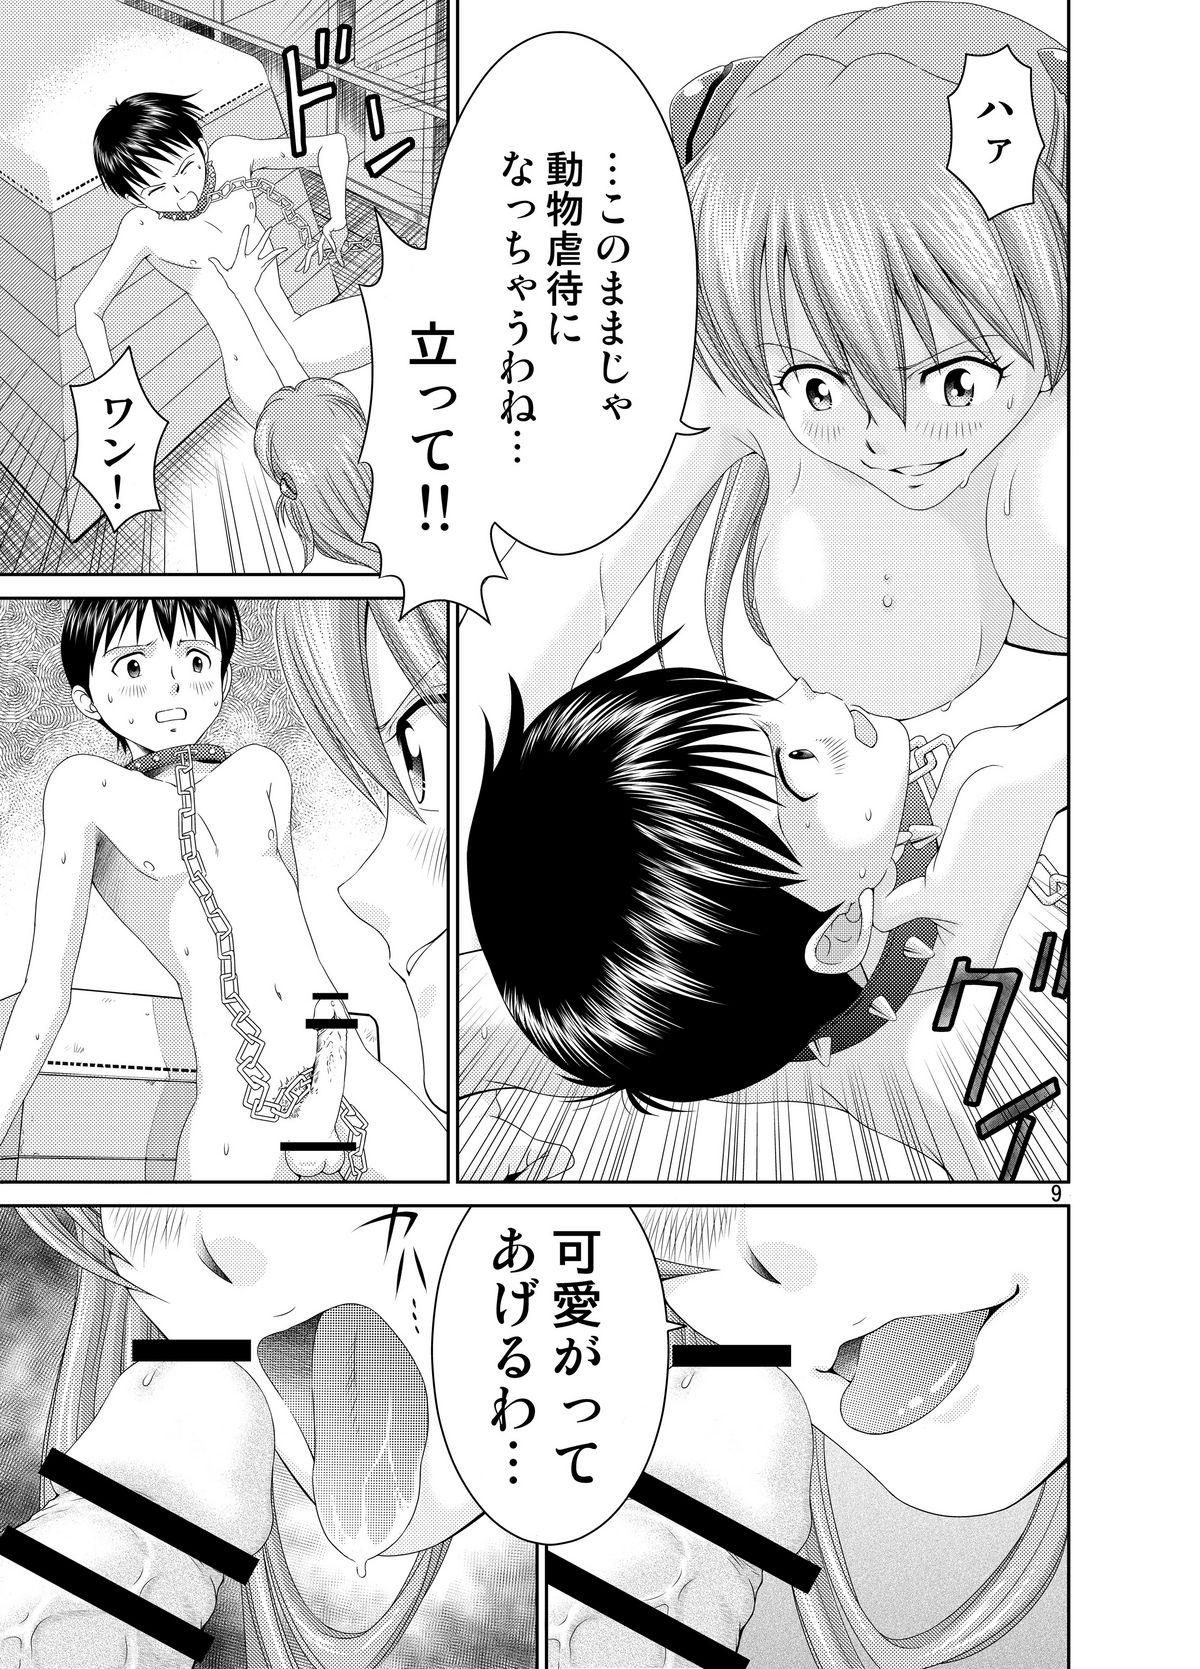 Sixtynine Me o Tojiru Magiwa ni Kimi o Mitai - Neon genesis evangelion Panocha - Page 8